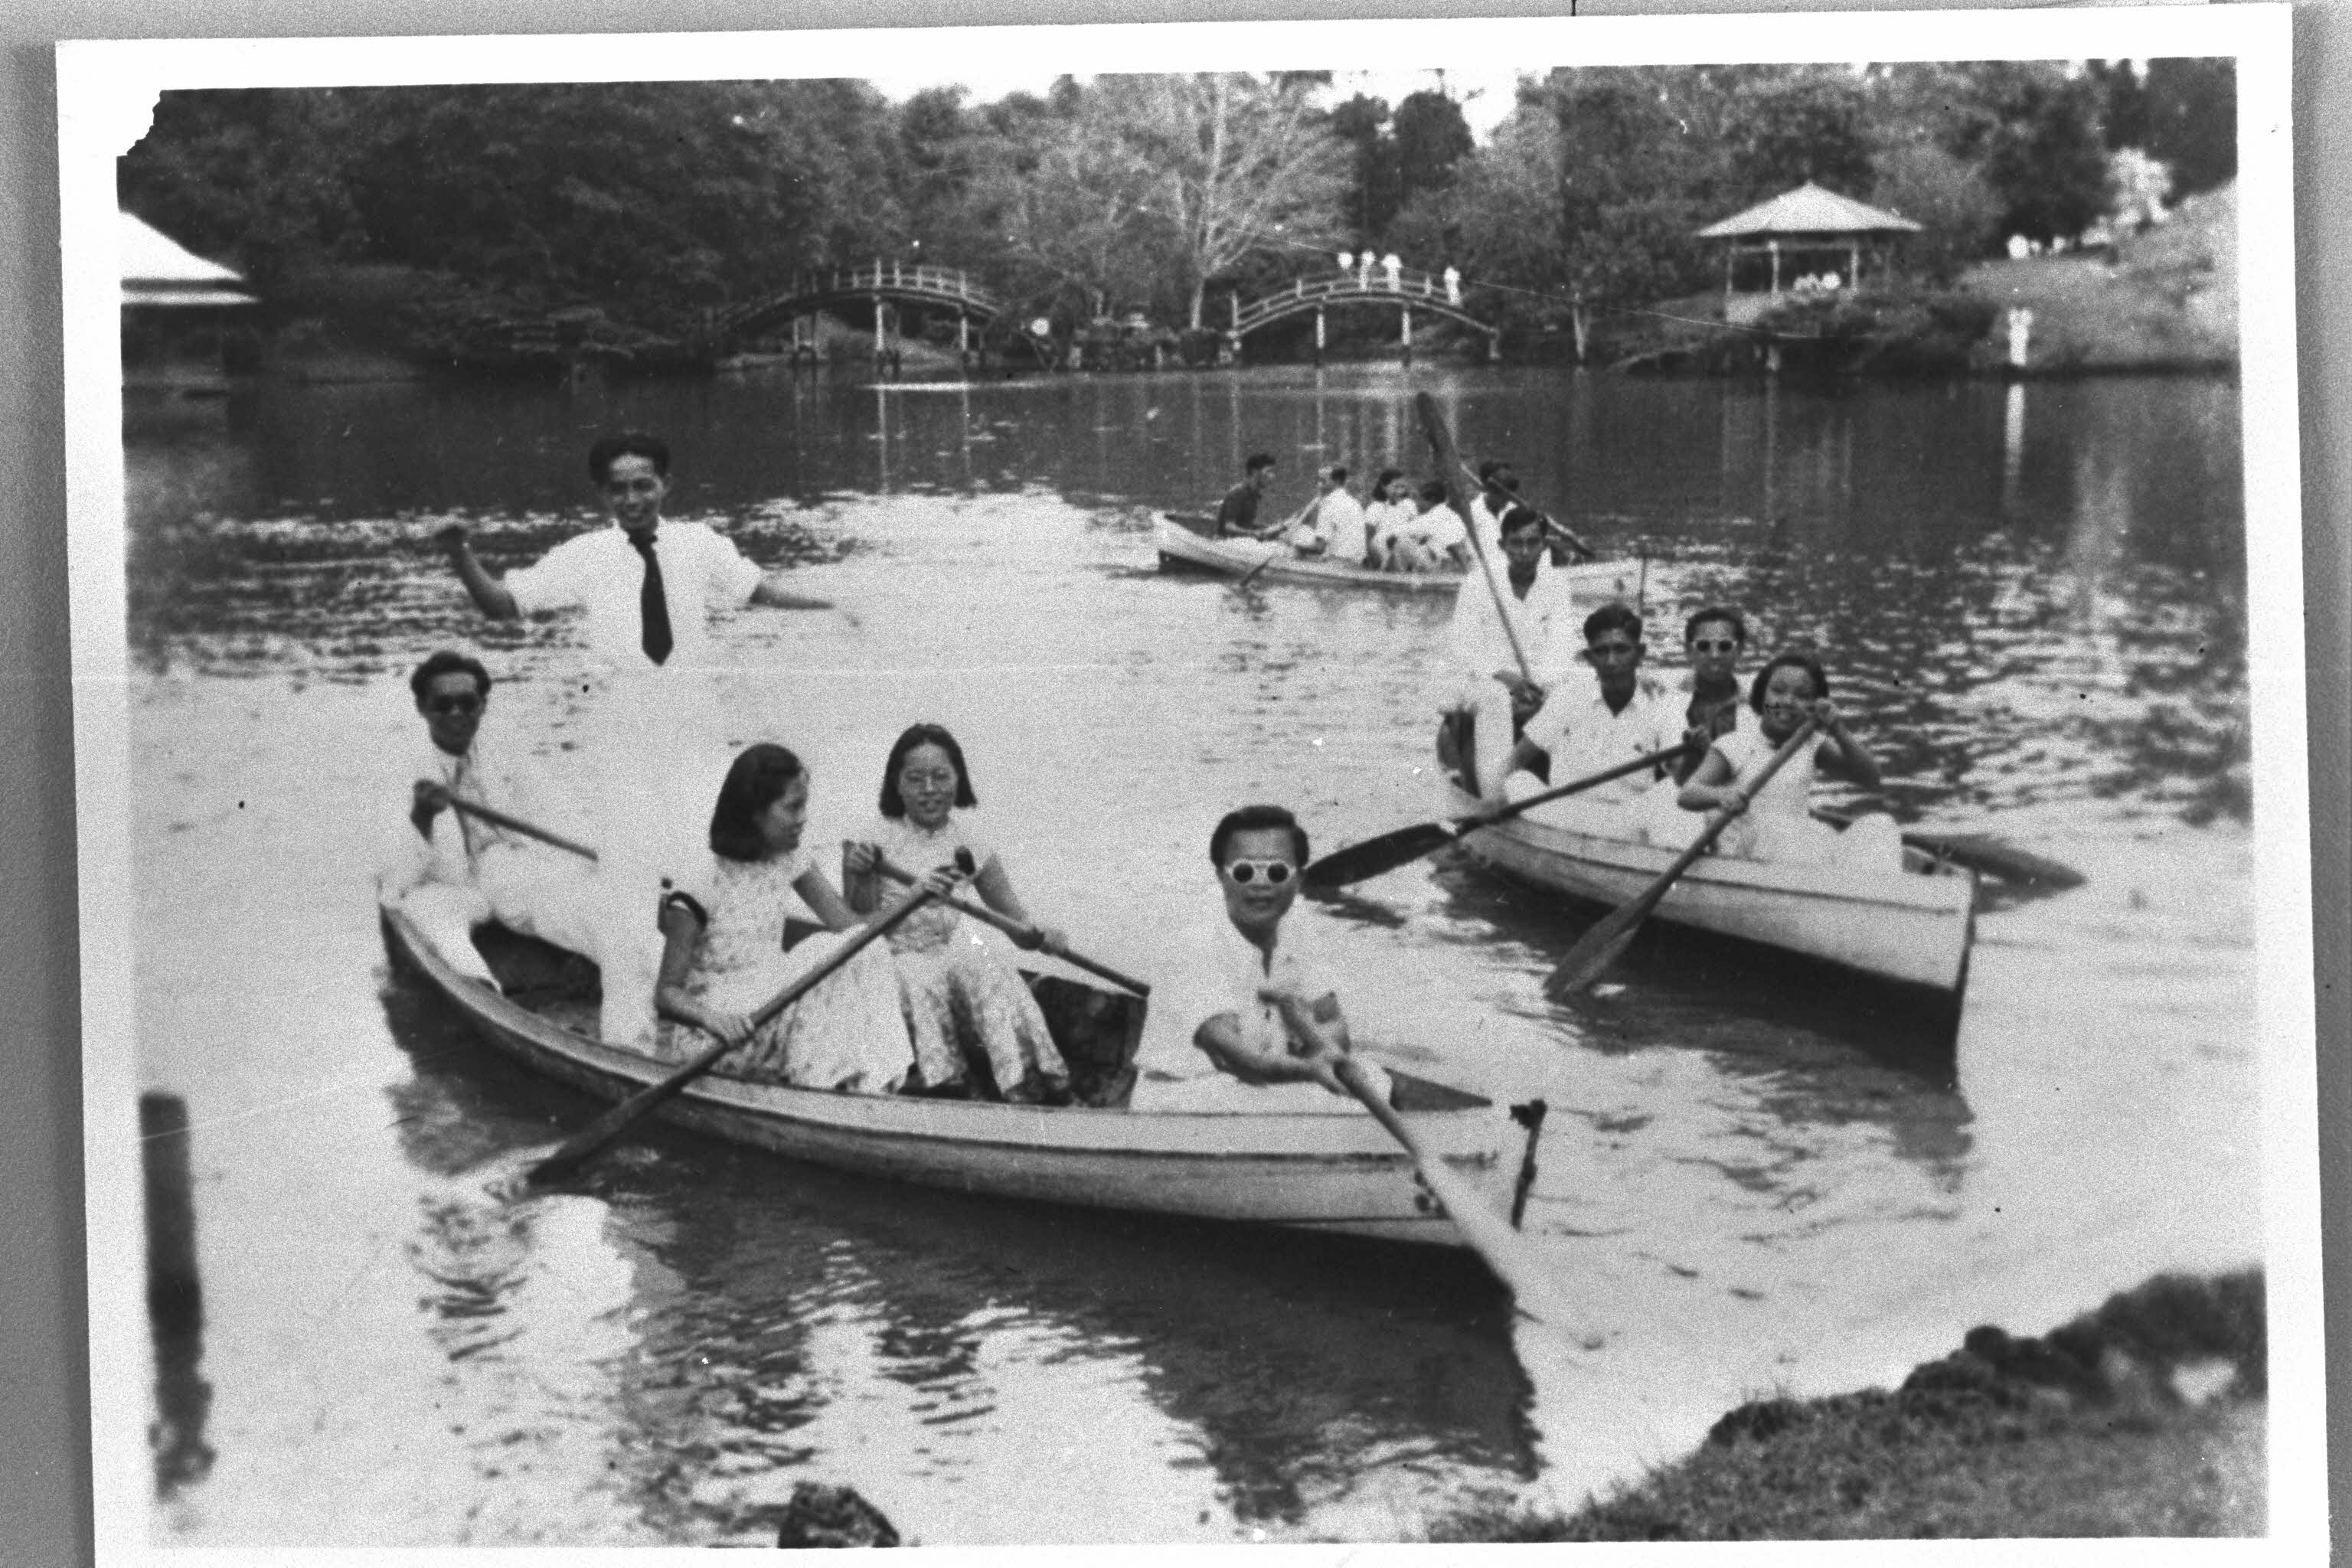 Boating at Alkaff Lake Garden, 1950s